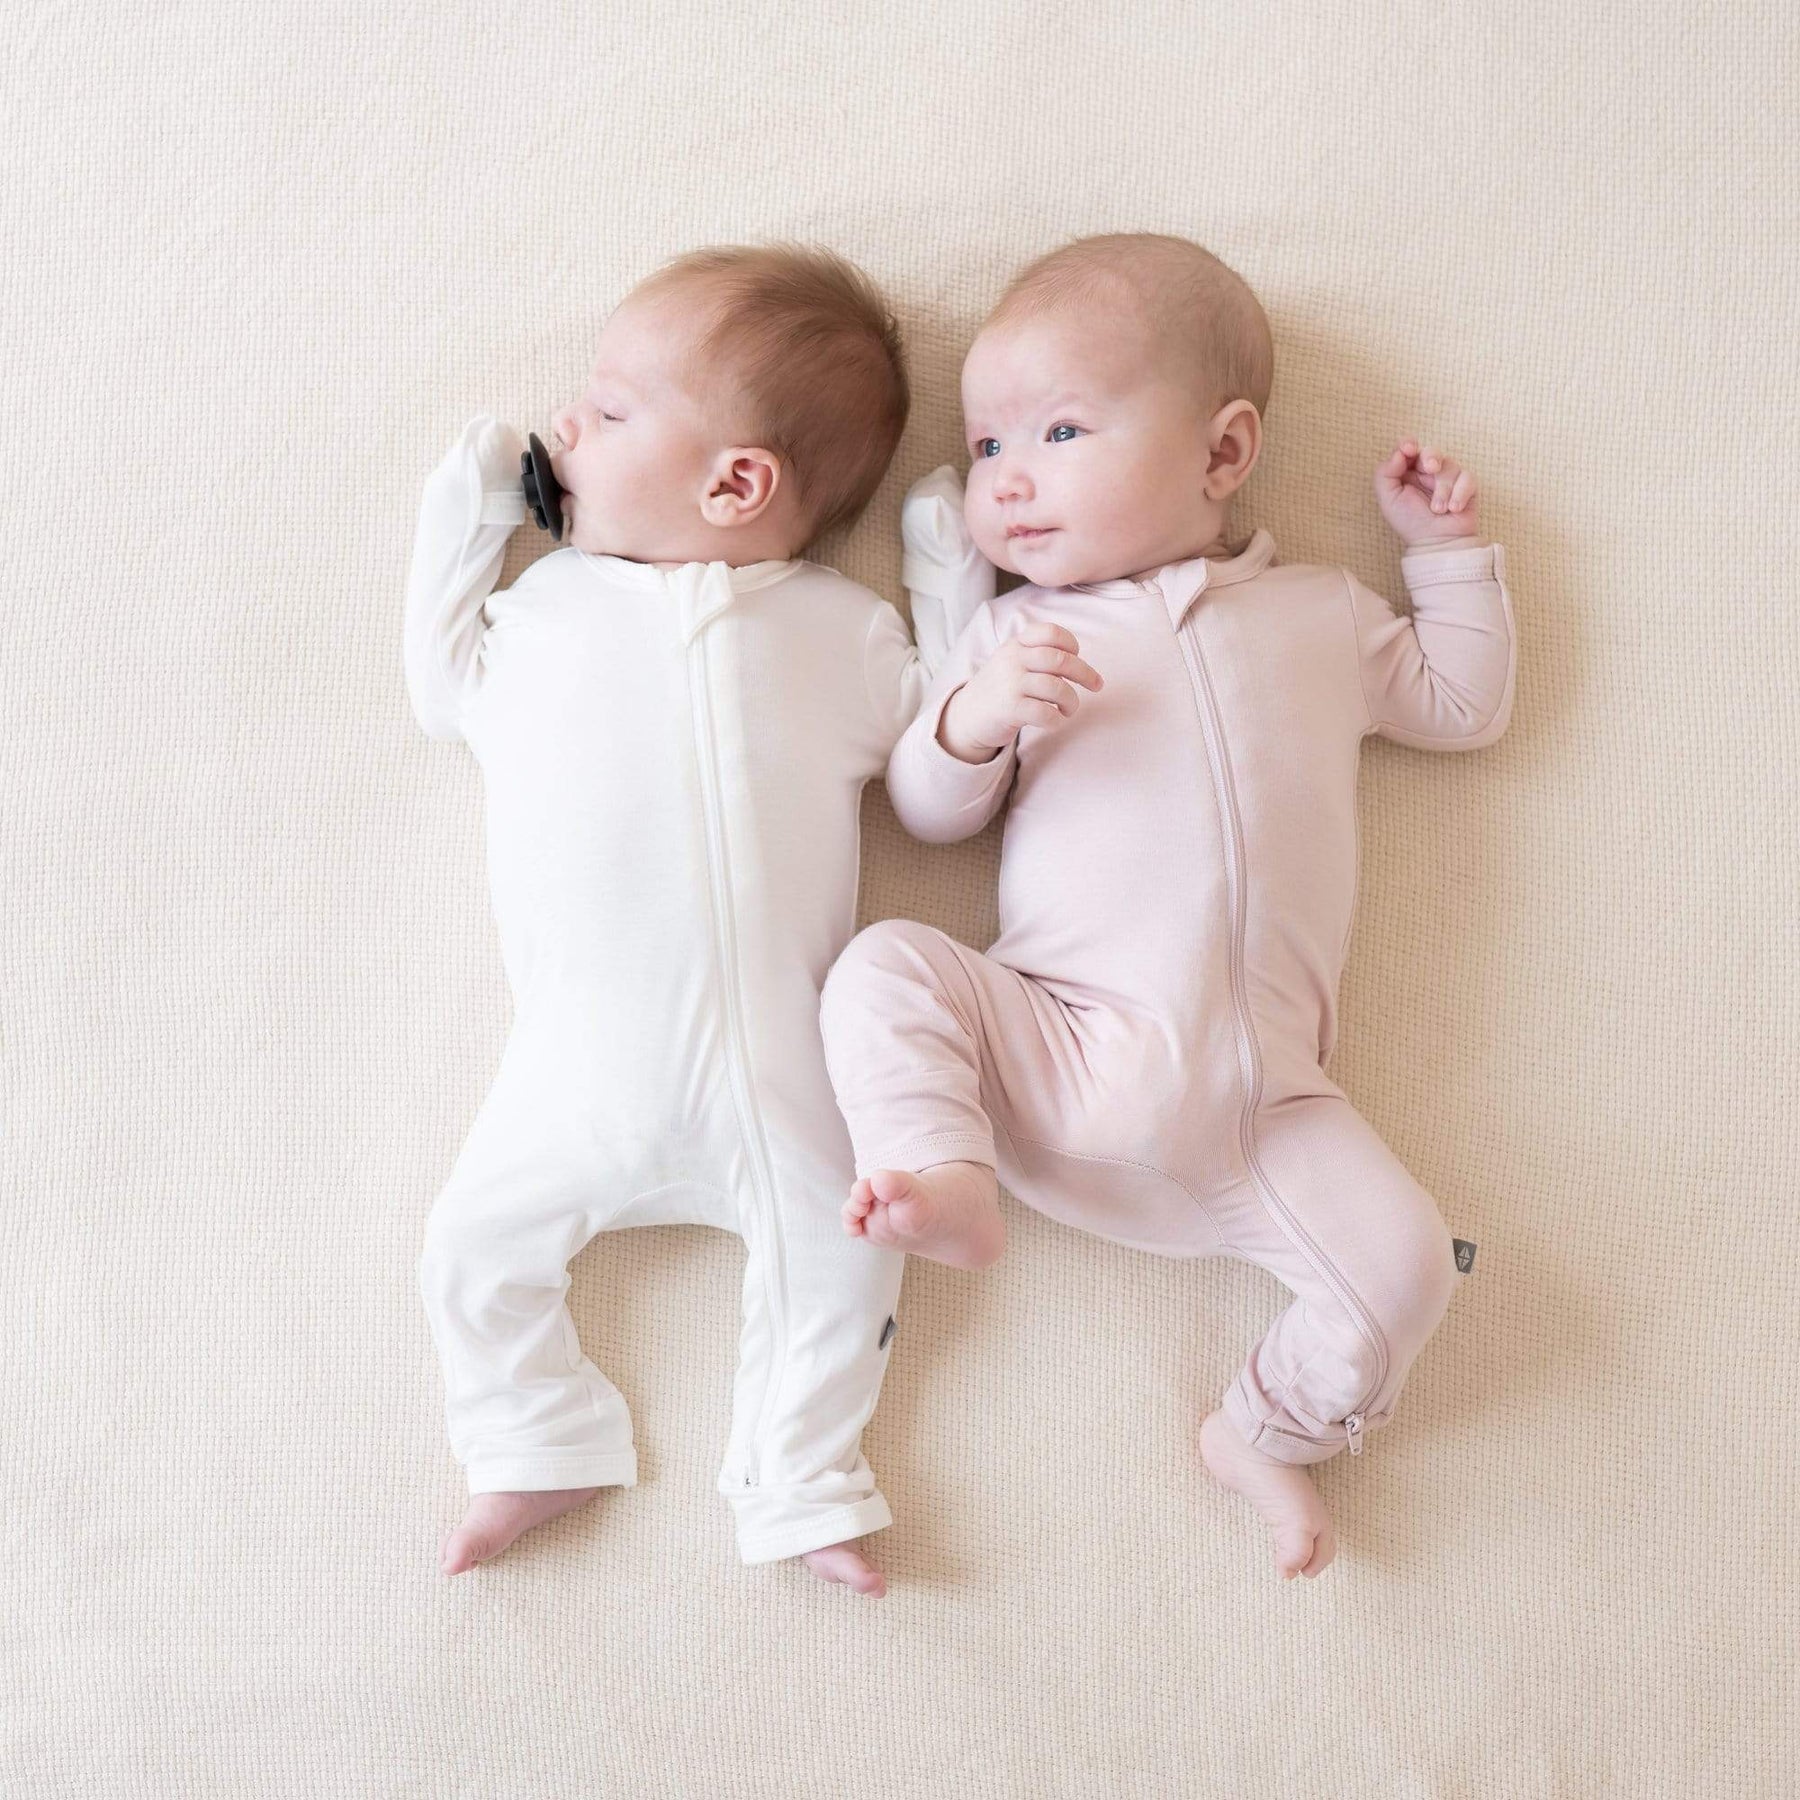 Babies wearing Kyte Baby bamboo Zippered Romper pajamas